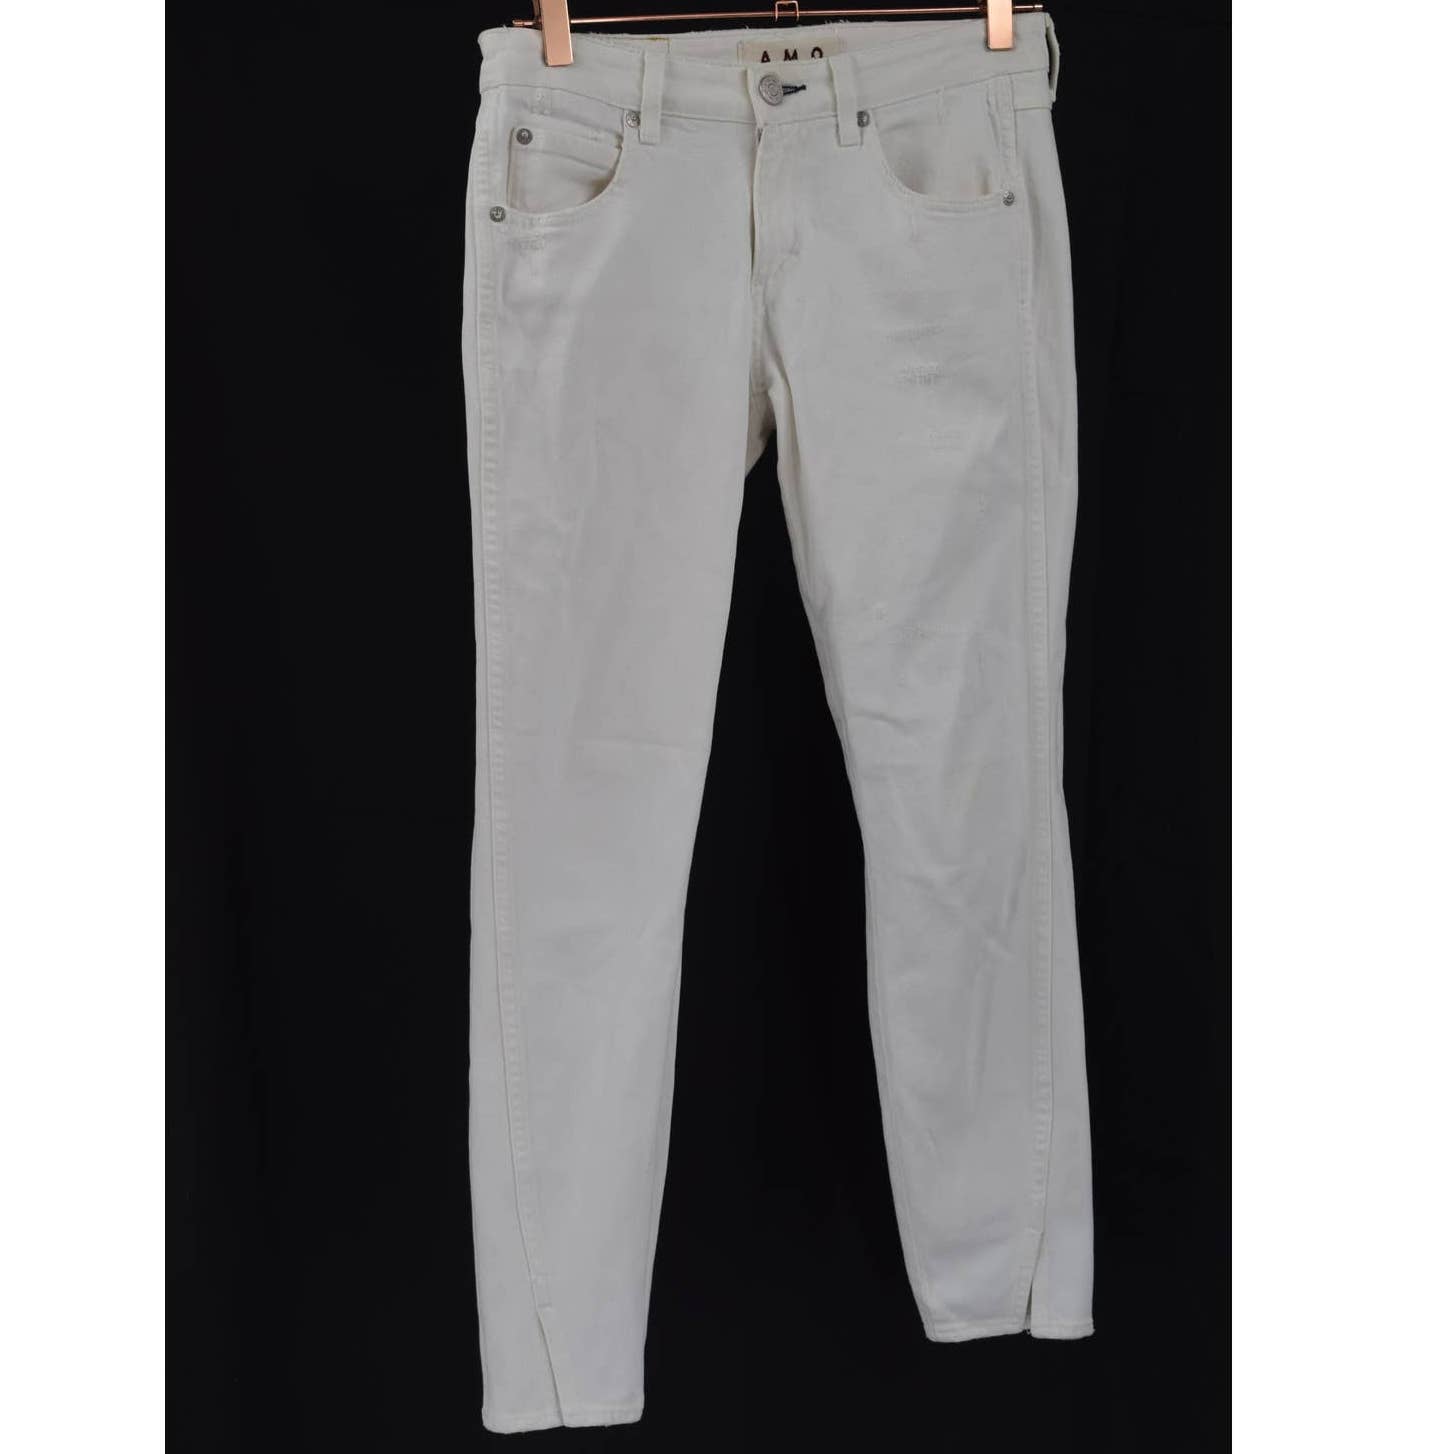 AMO Twist White Distressed Denim Jeans - 26